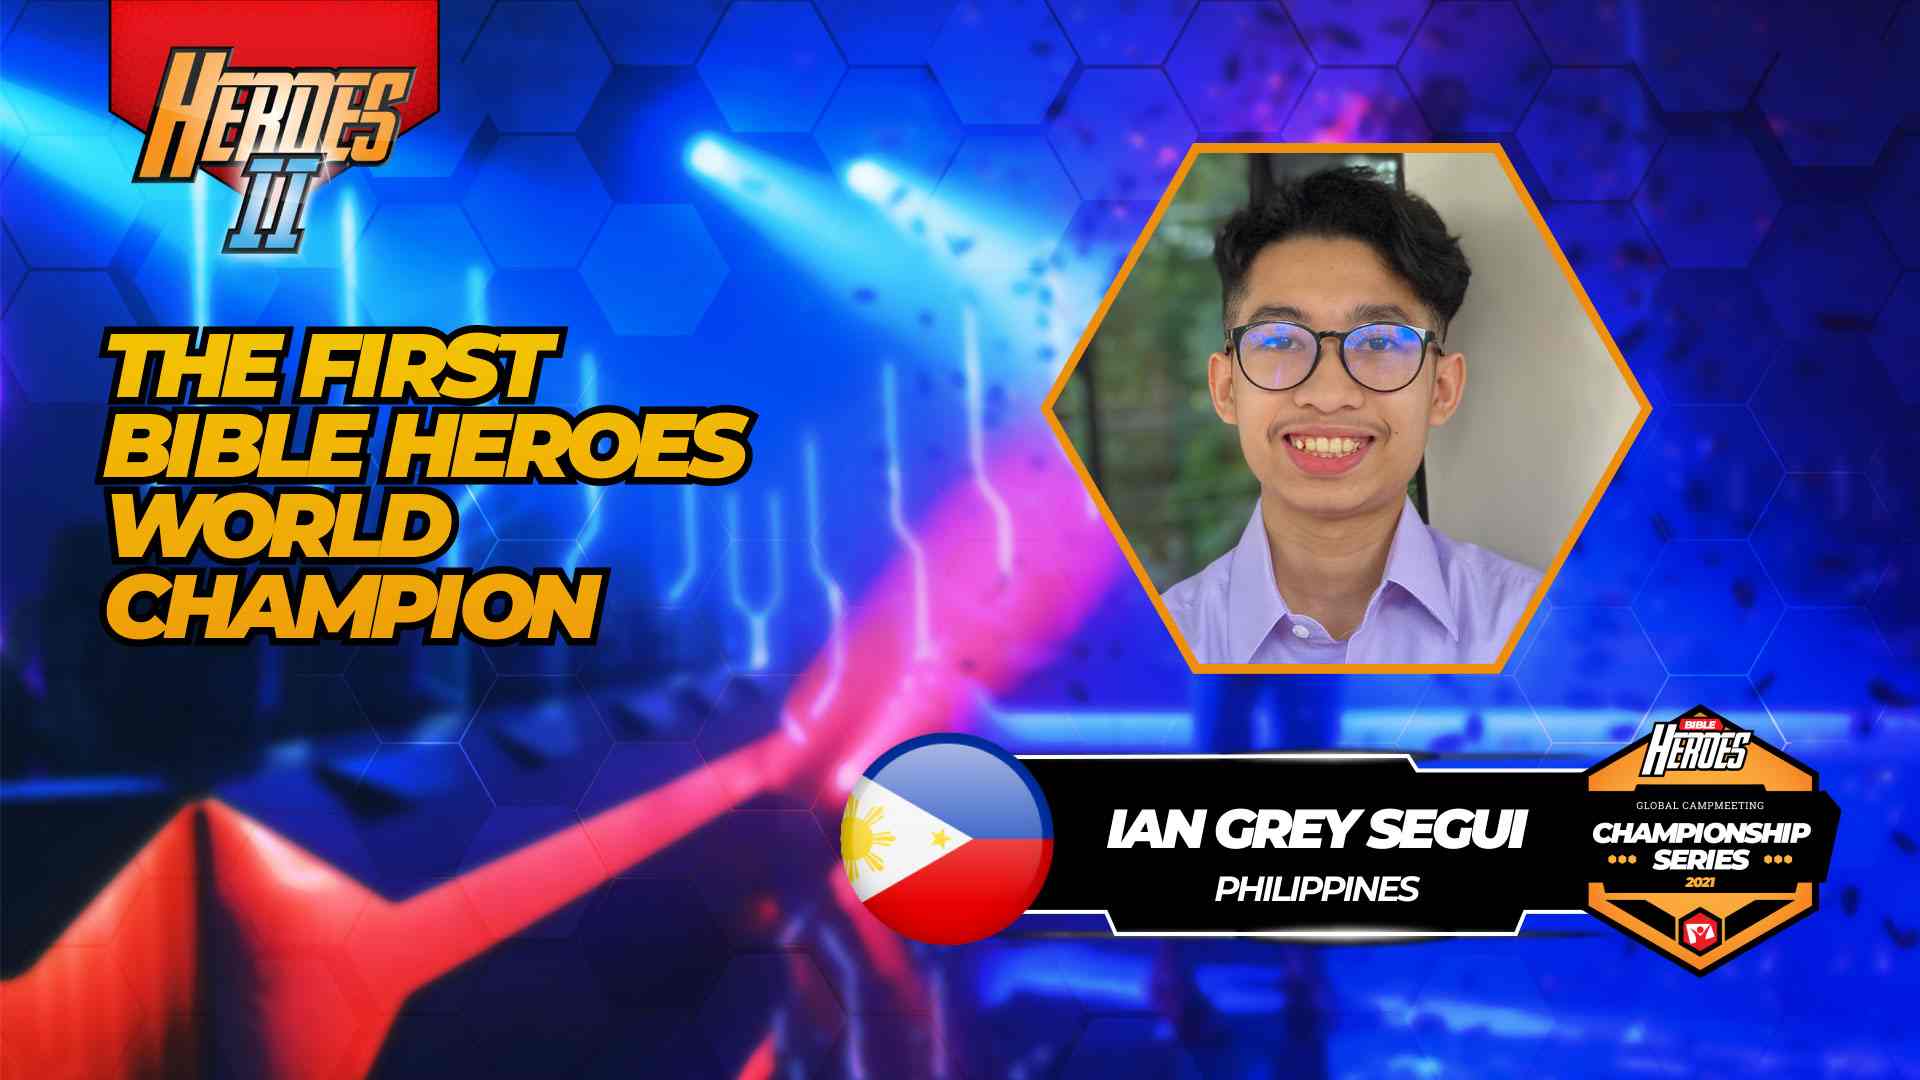 Ian Grey Segui - Heroes II Champion 2021